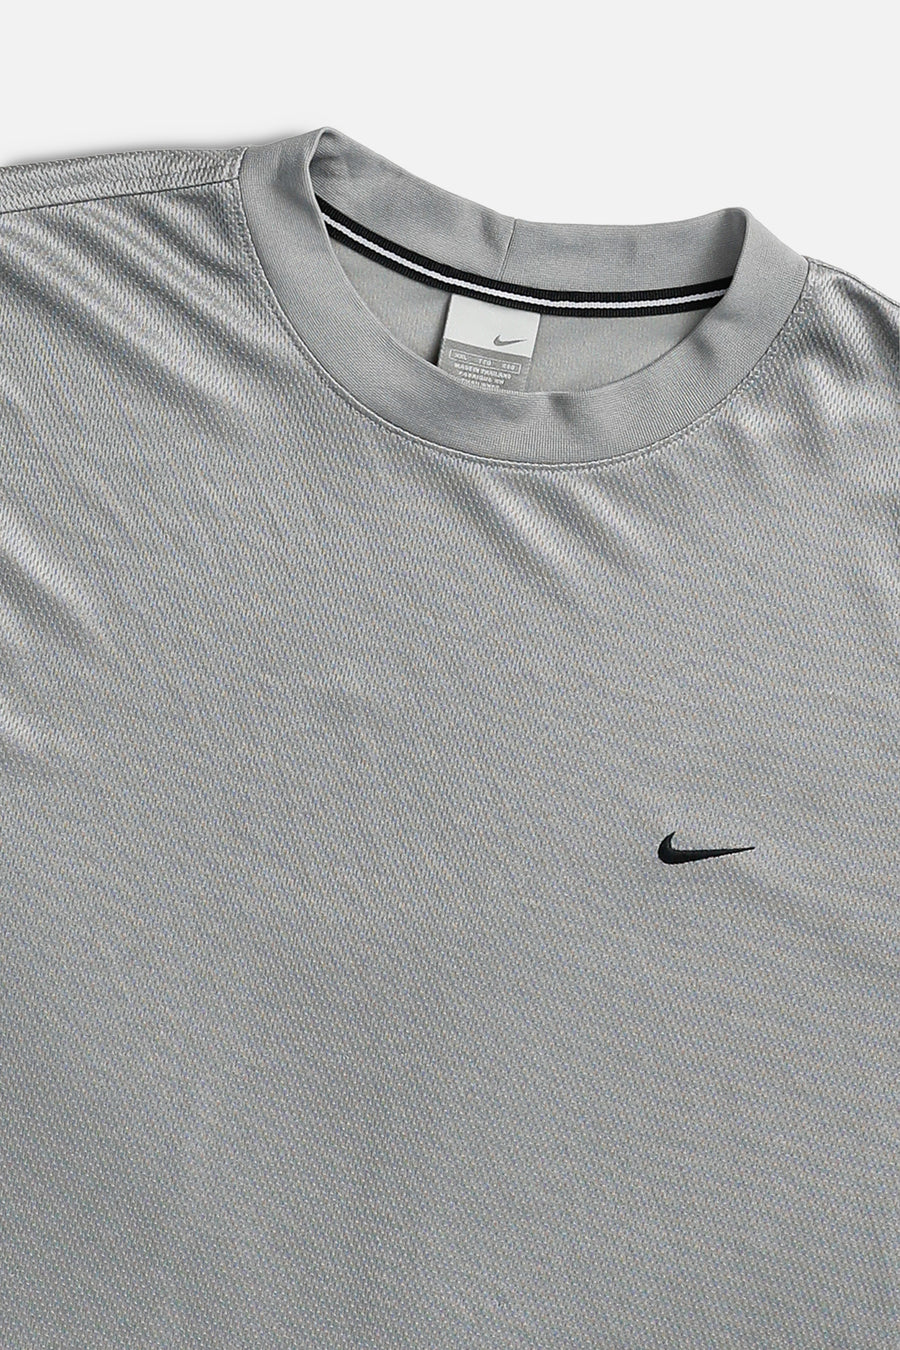 Vintage Nike Athletic Long Sleeve Tee - XXL